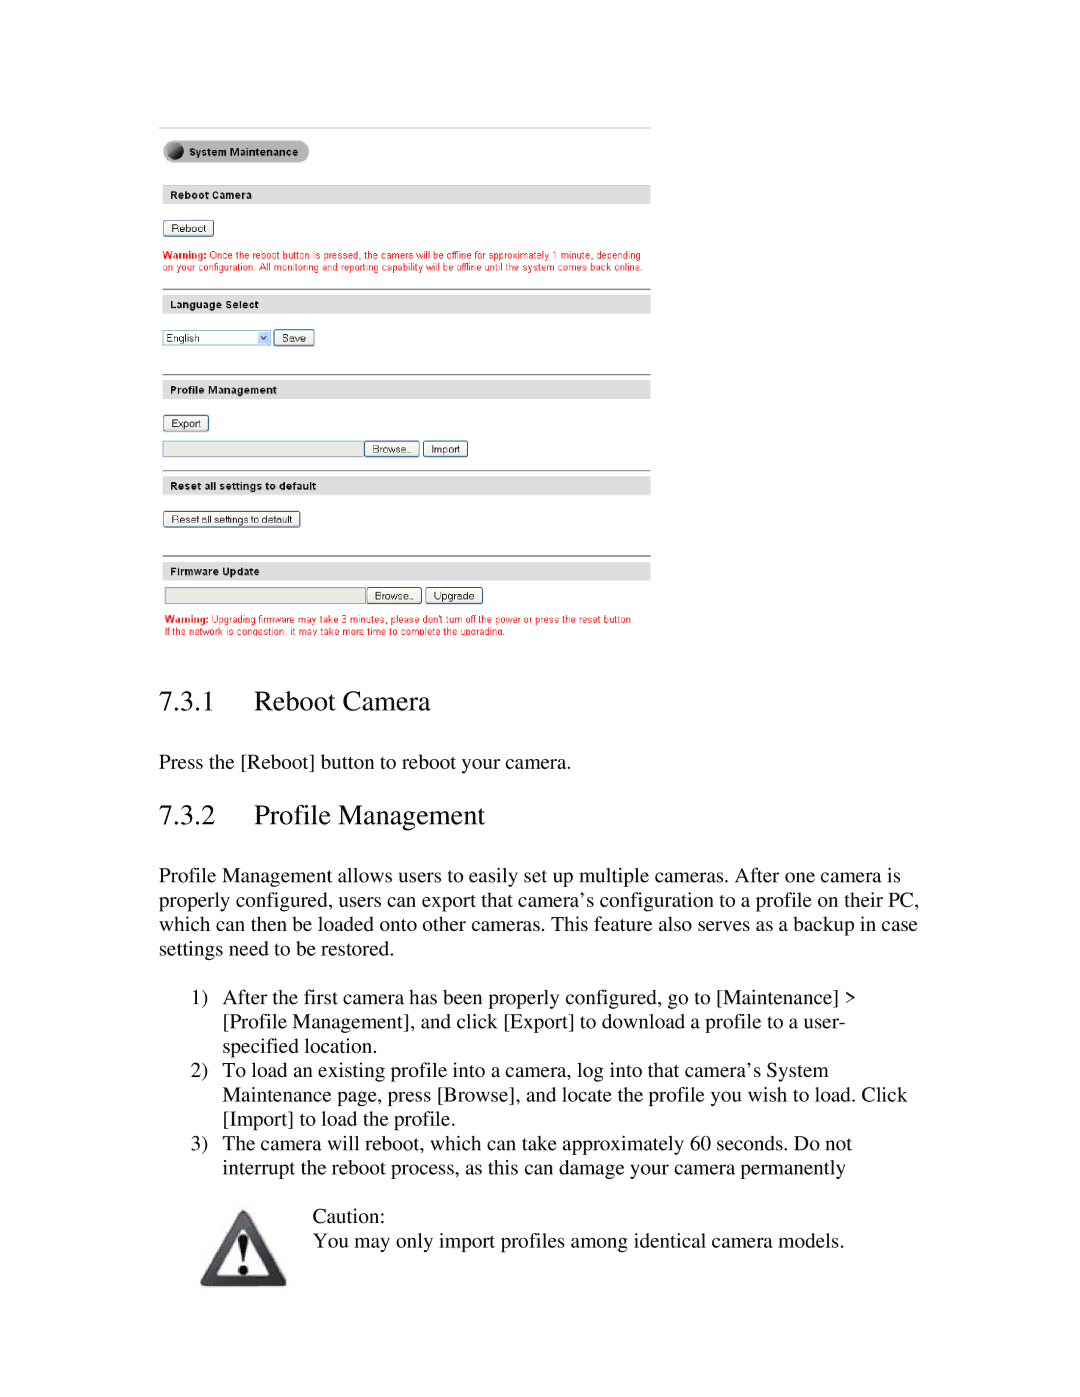 ZyXEL Communications network camera manual Reboot Camera, Profile Management 